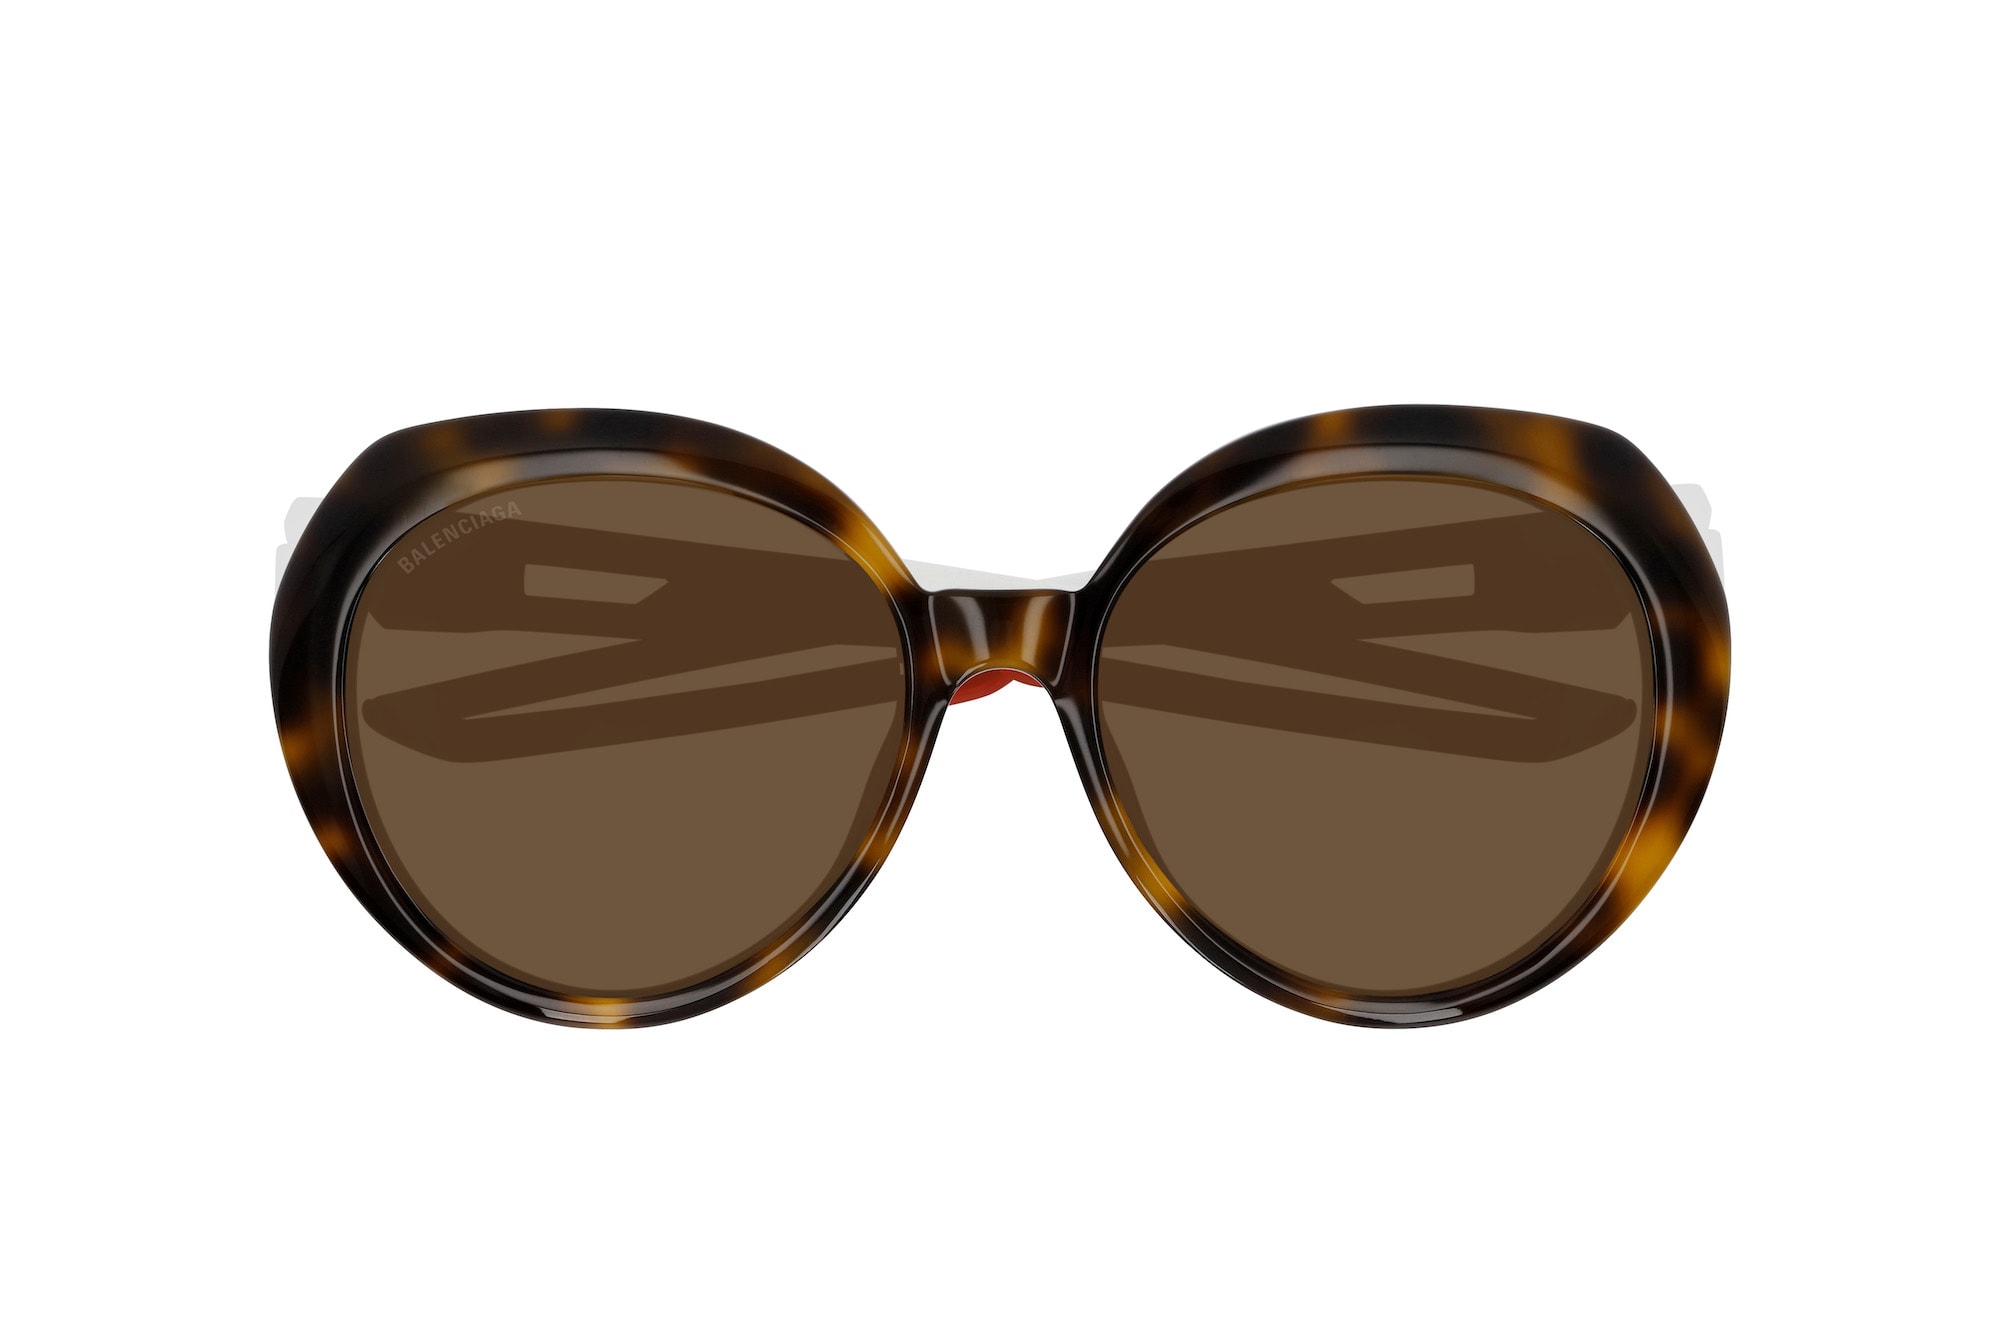 Balenciaga Drops New Eyewear for Spring Summer Collection Sunglasses Frames Fashion Shades Sunnies